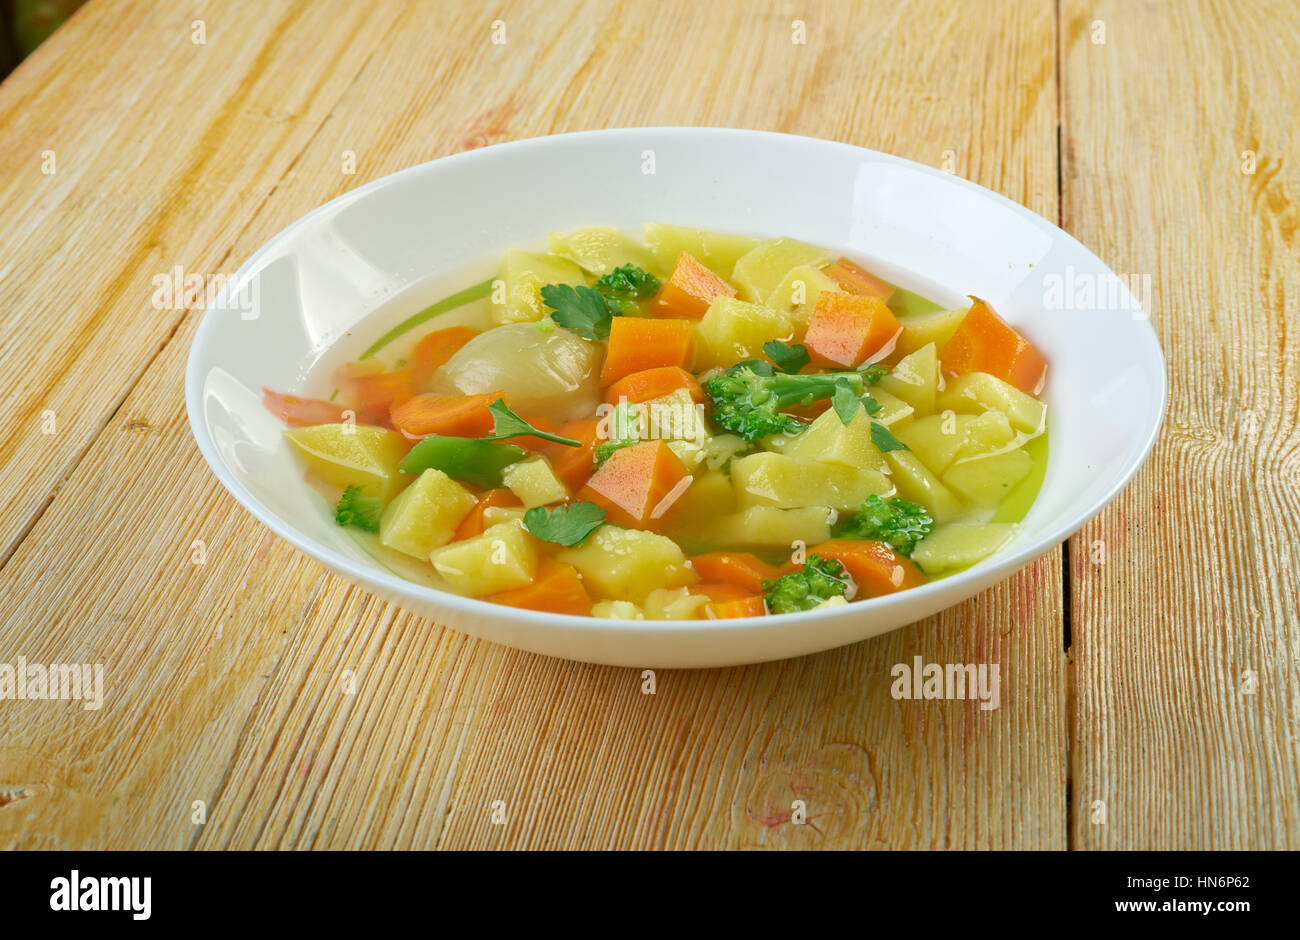 Traditionelle finnische Gemüse Suppe - Sommer Suppe Lohikeitto Stockfoto